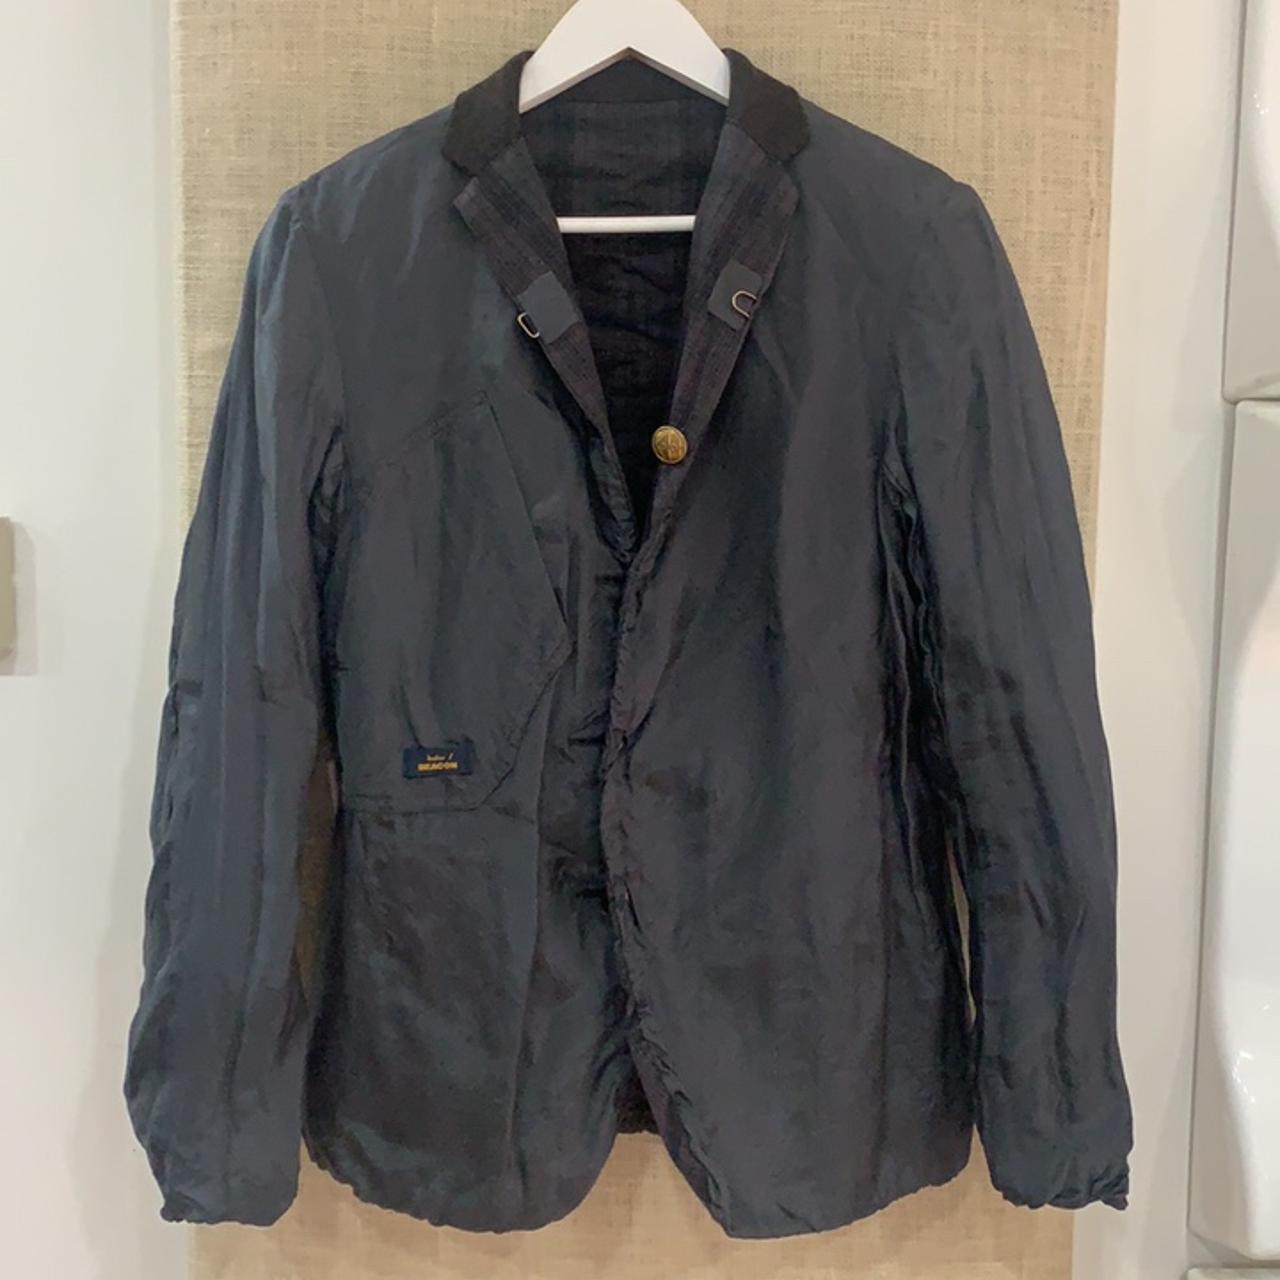 Product Image 4 - Kolor-japan multi button front jacket

Beautiful